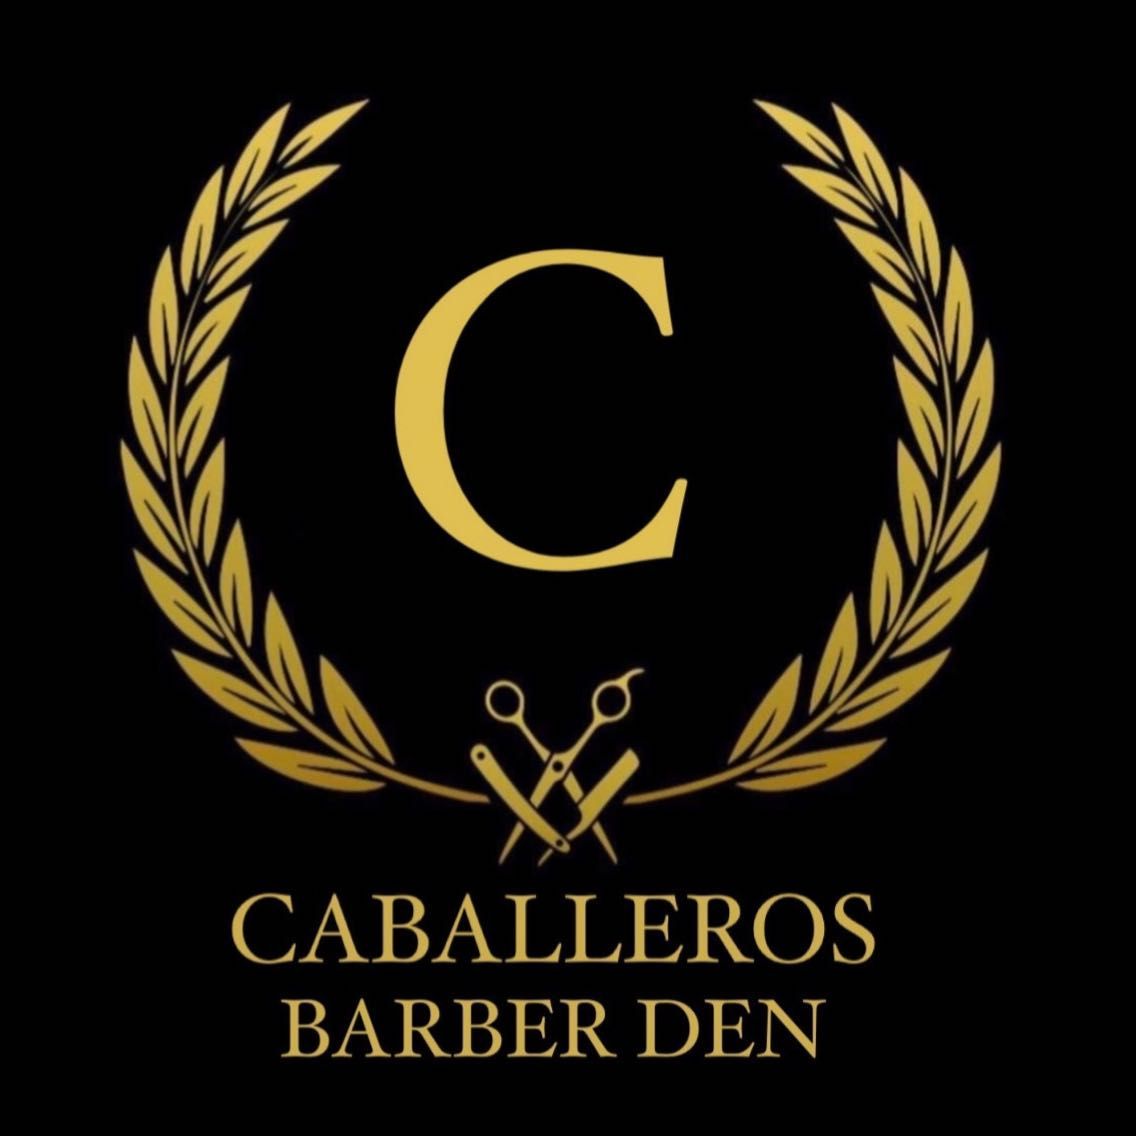 Caballero’s Barber Den, 220 E. Oleander, Suite 4, La Feria, 78559